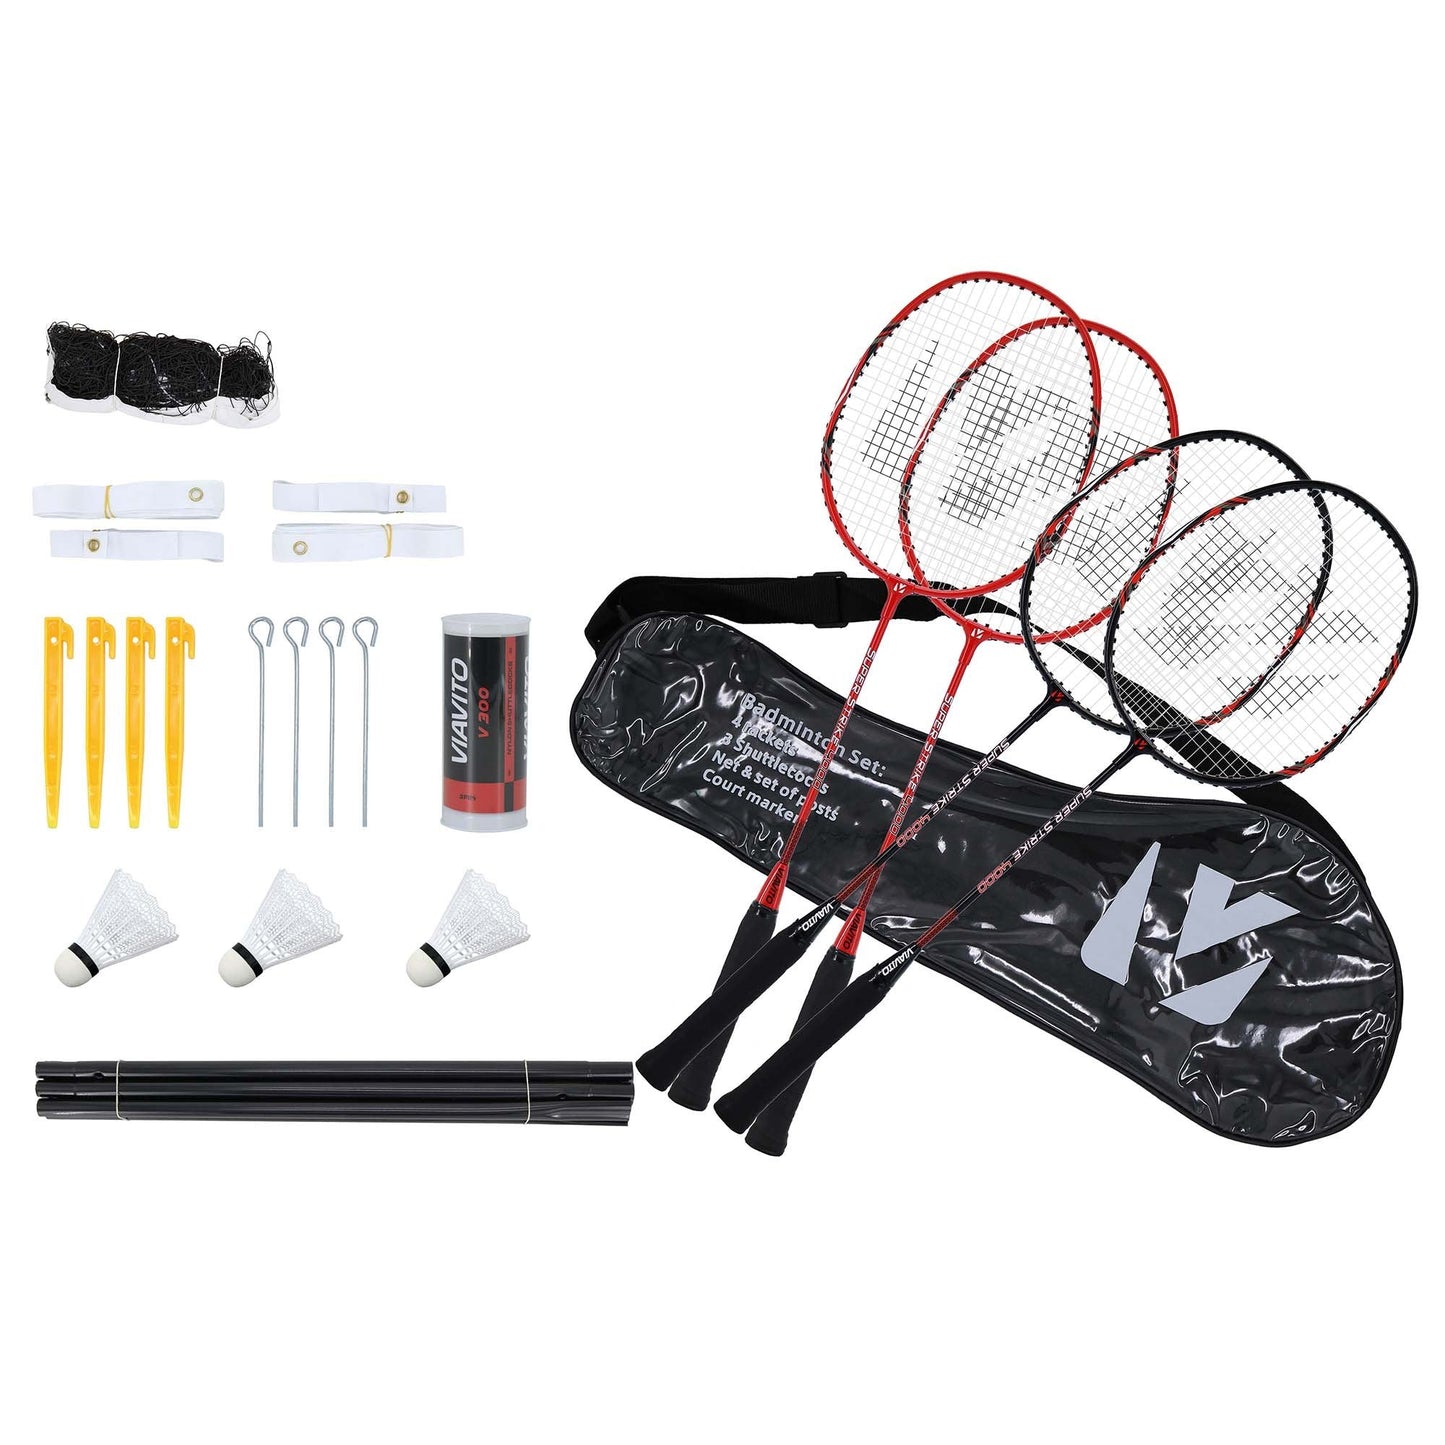 |Viavito Super Strike 4 Player Badminton Set Package Rackets - All Elements|